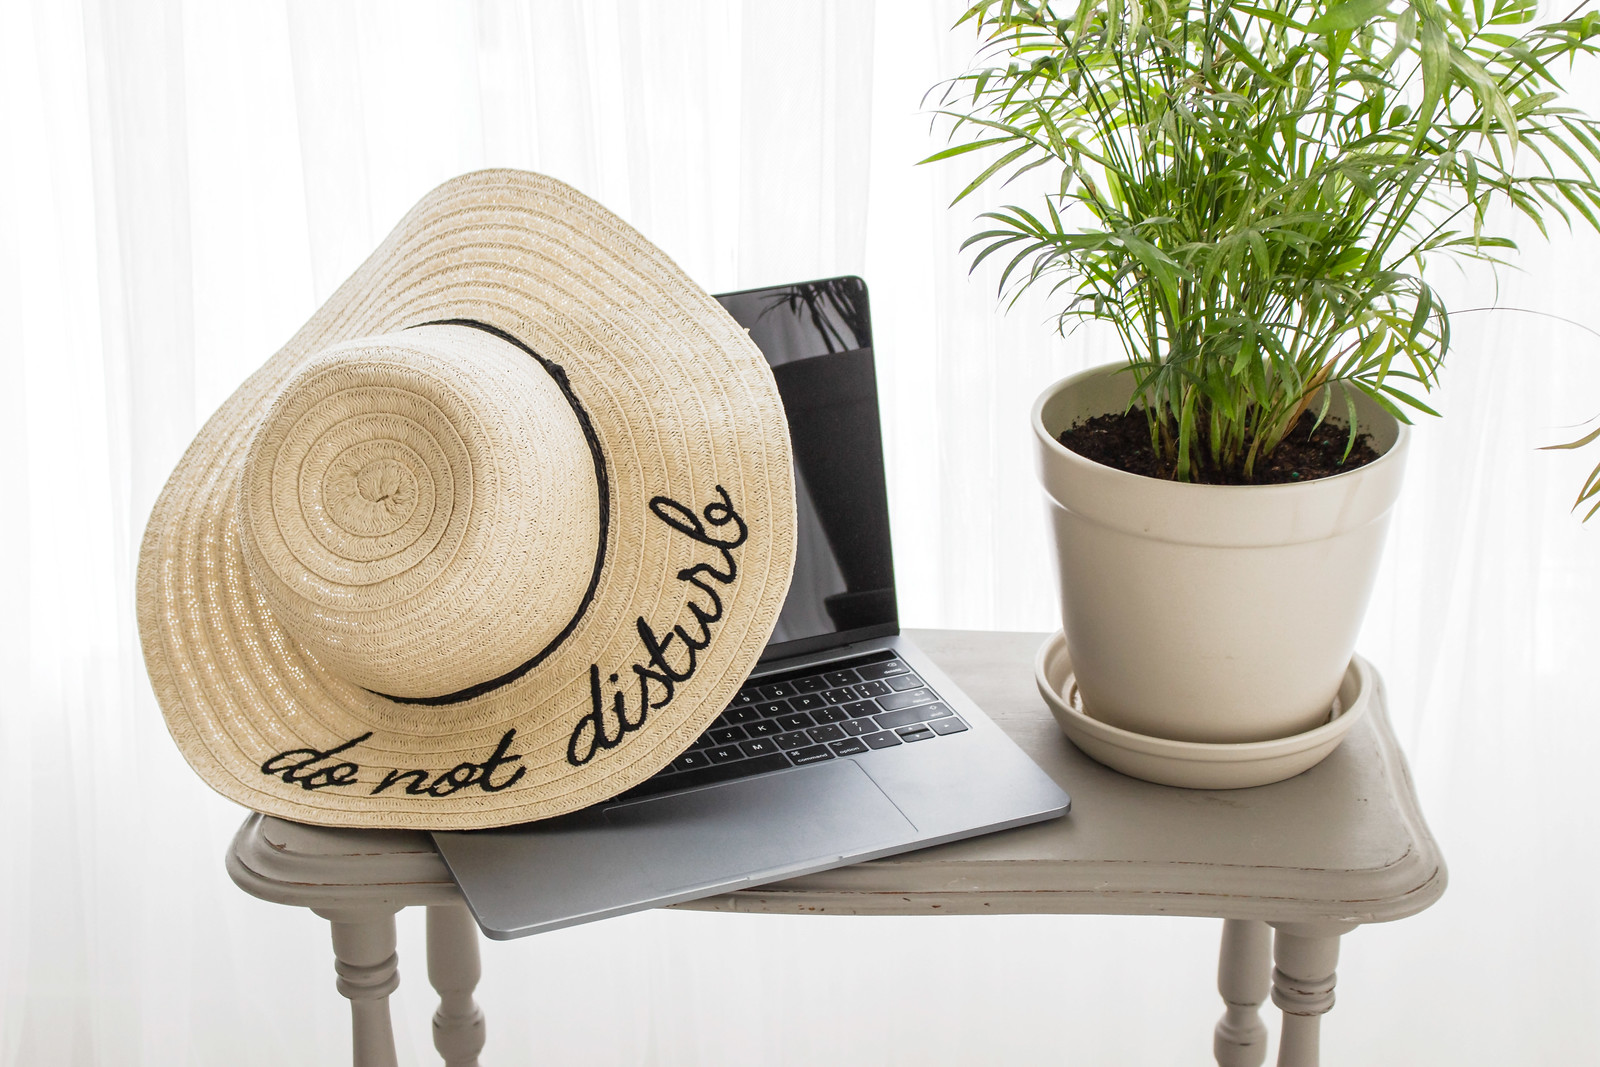 do not disturb hat on laptop